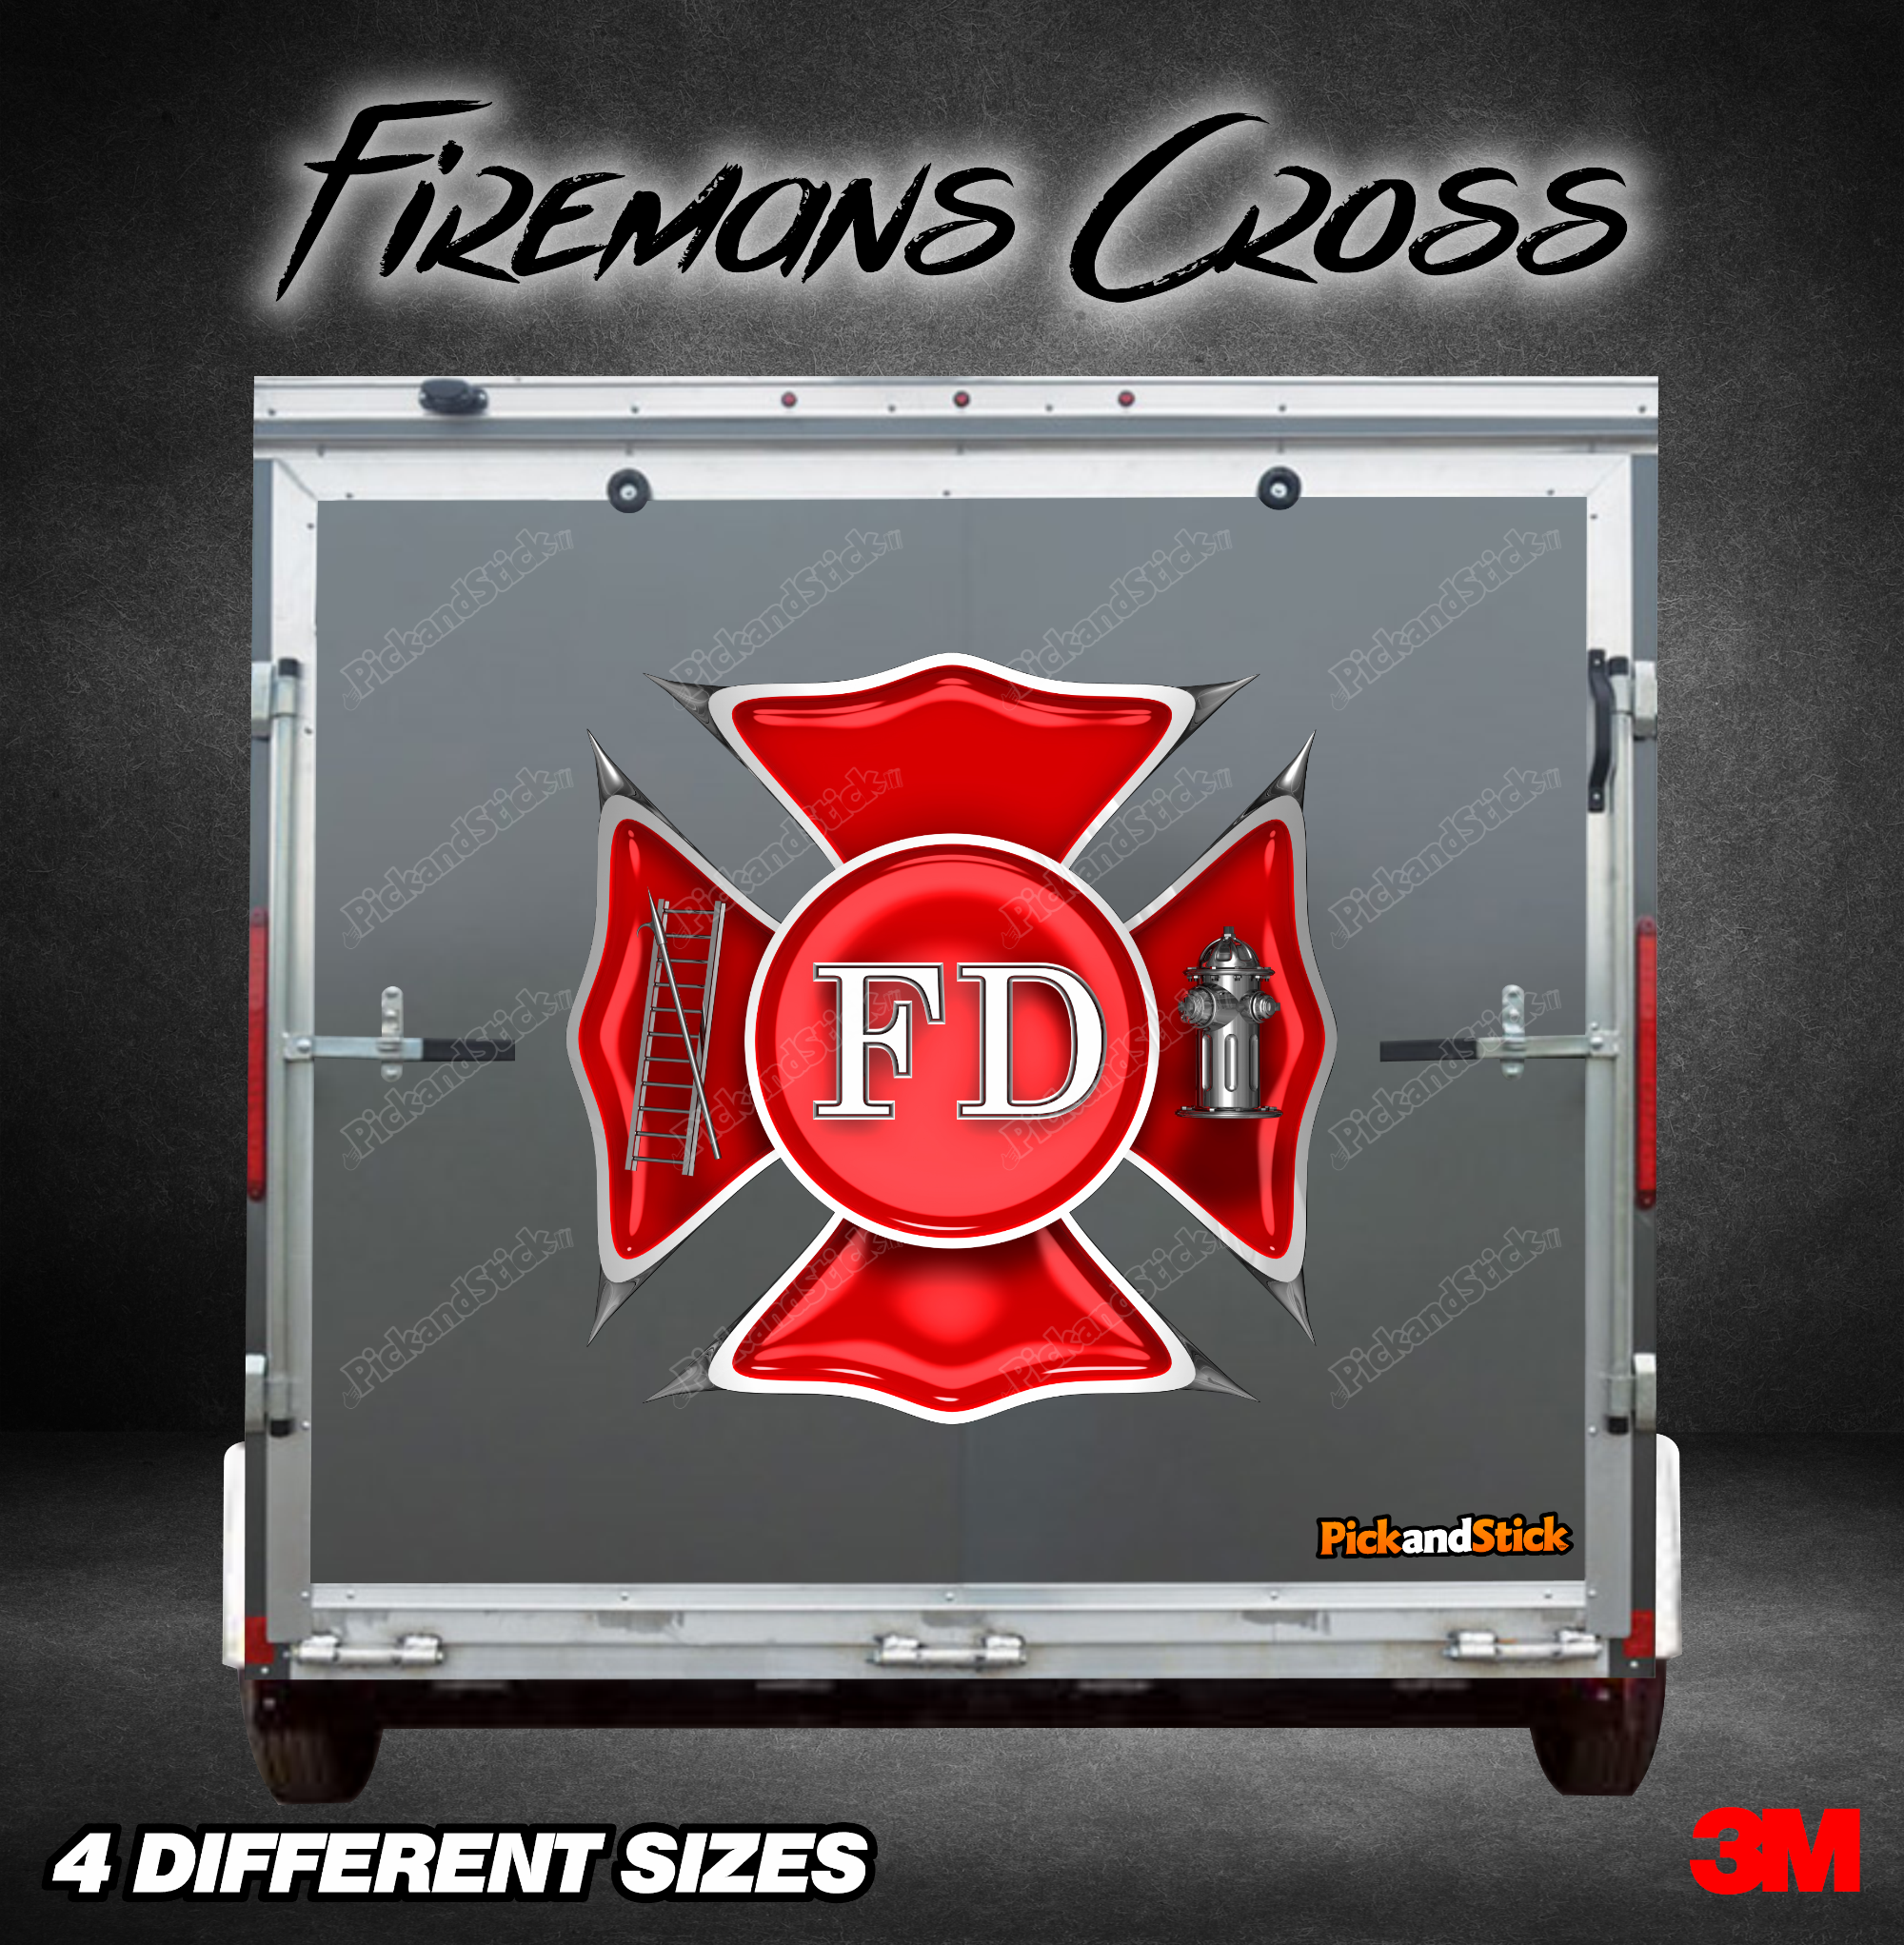 Firemans Cross Trailer Graphic - PickandStickcom